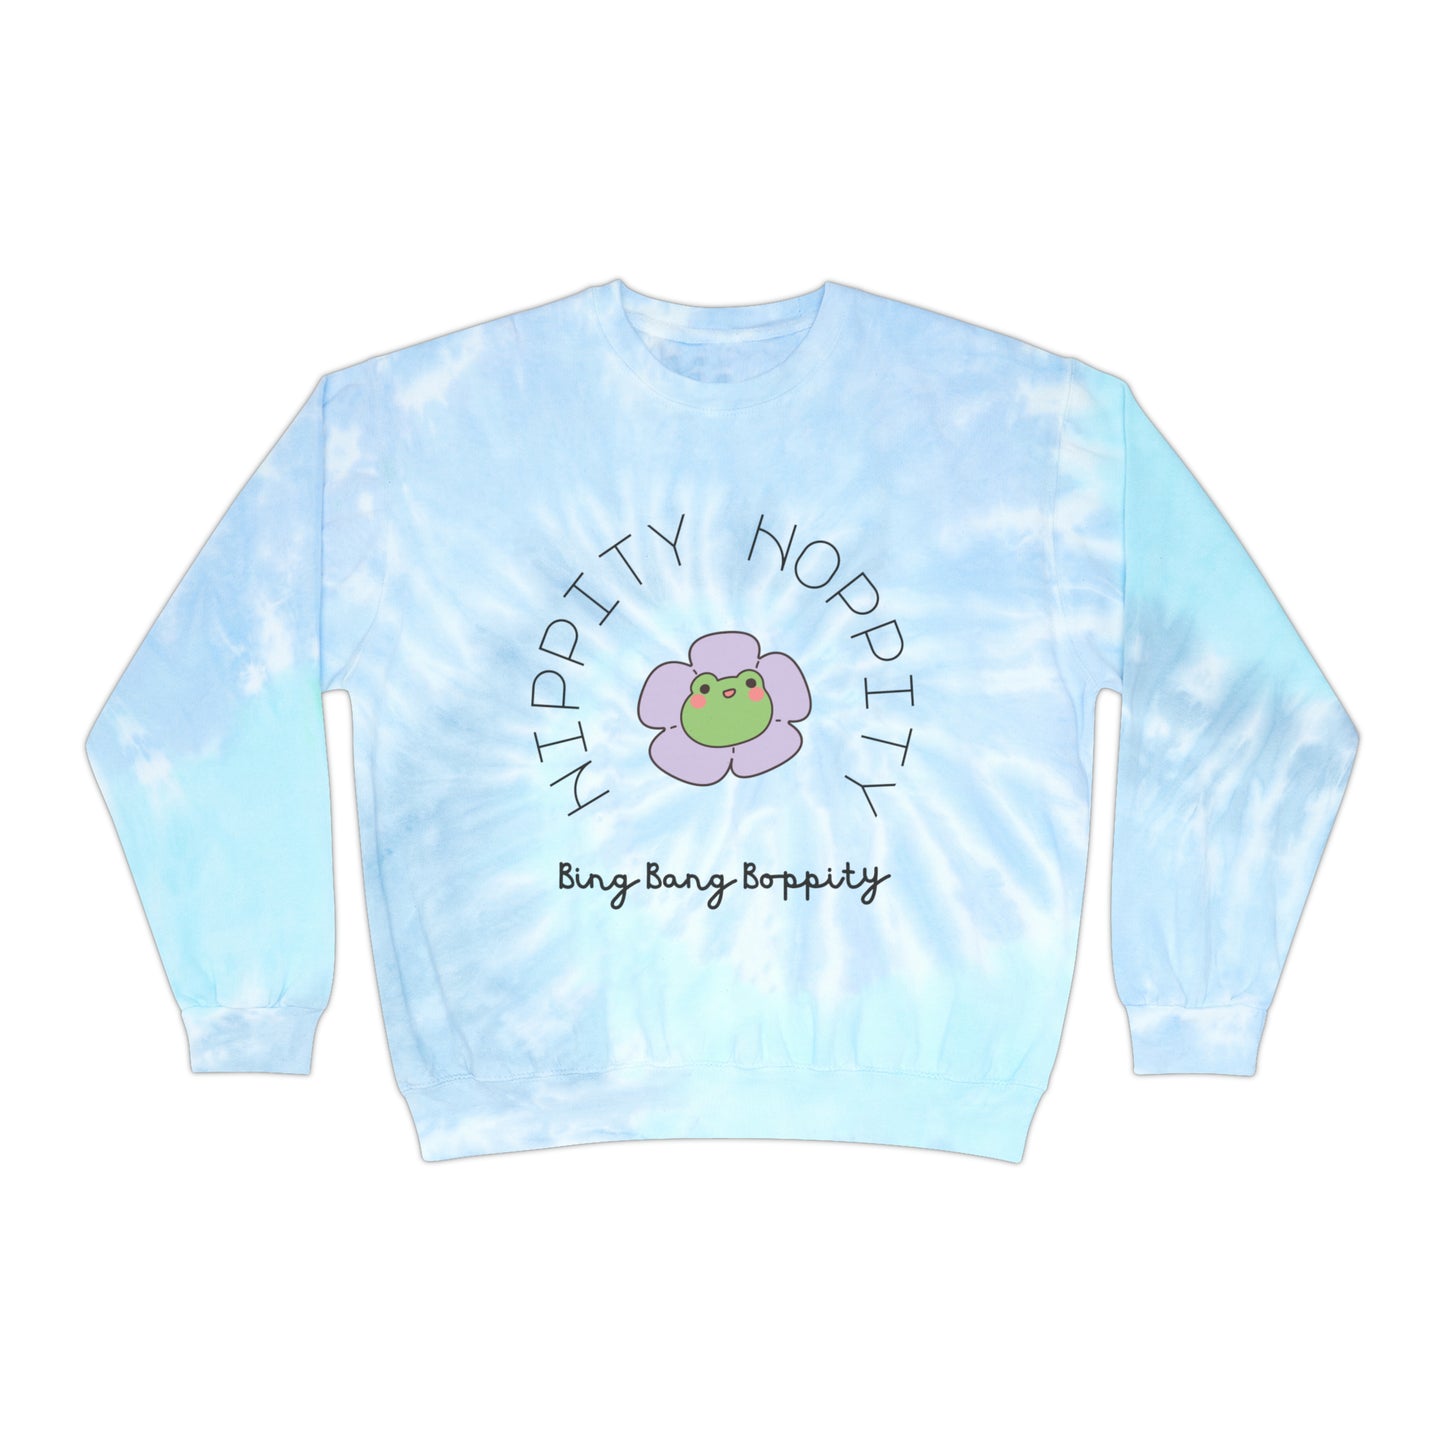 Hippity Hoppity Bing Bang Boppity Sweatshirt